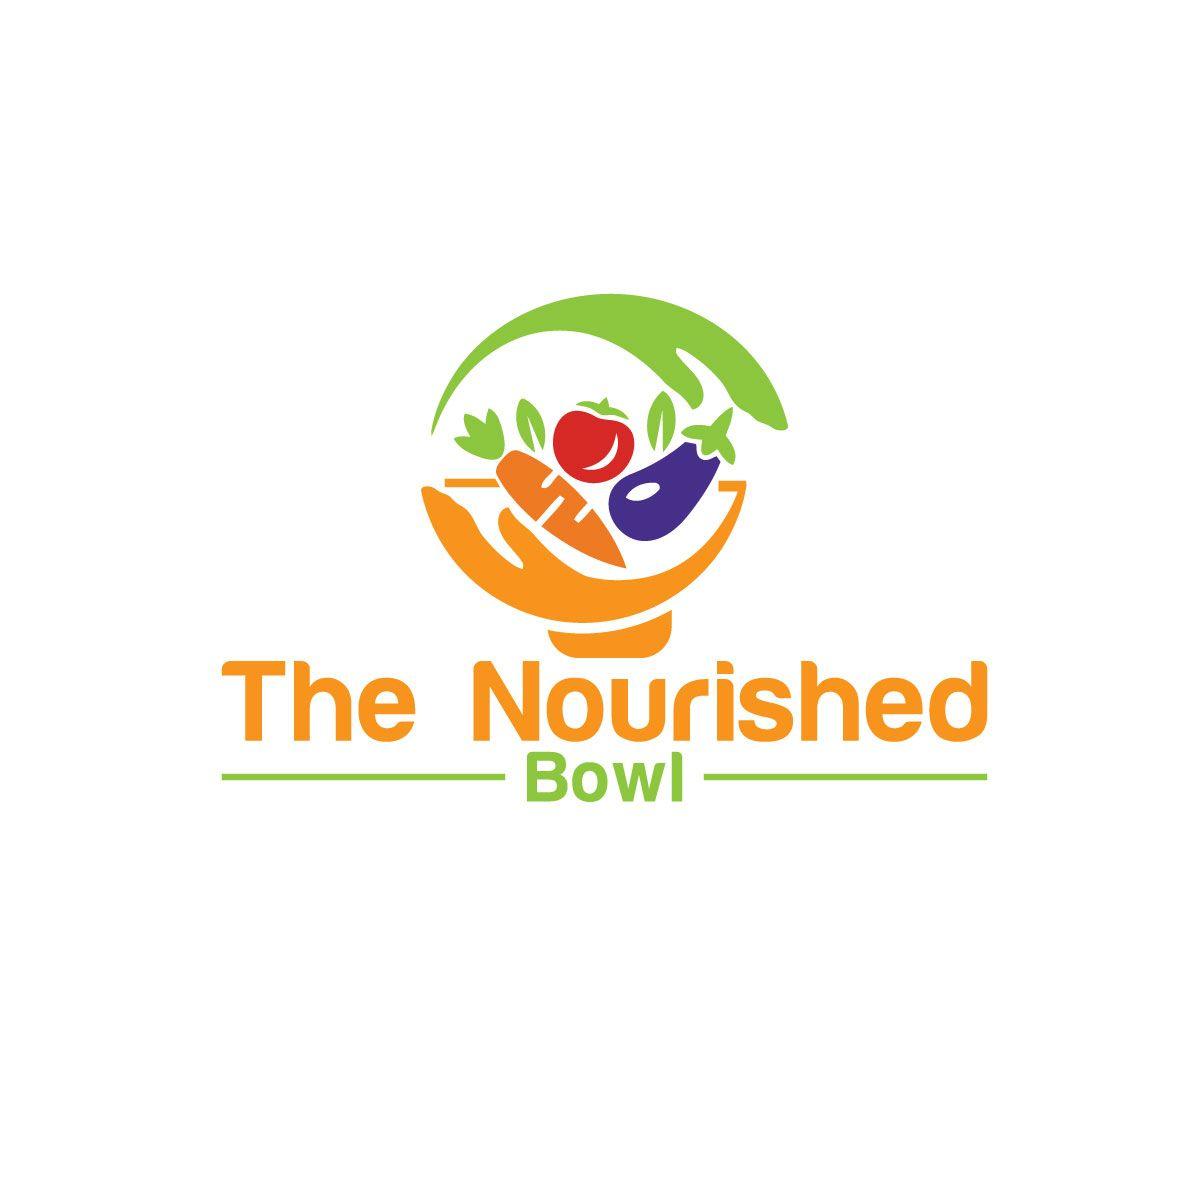 Ireland Fox Logo - Colorful, Playful, Food Service Logo Design for The Nourished Bowl